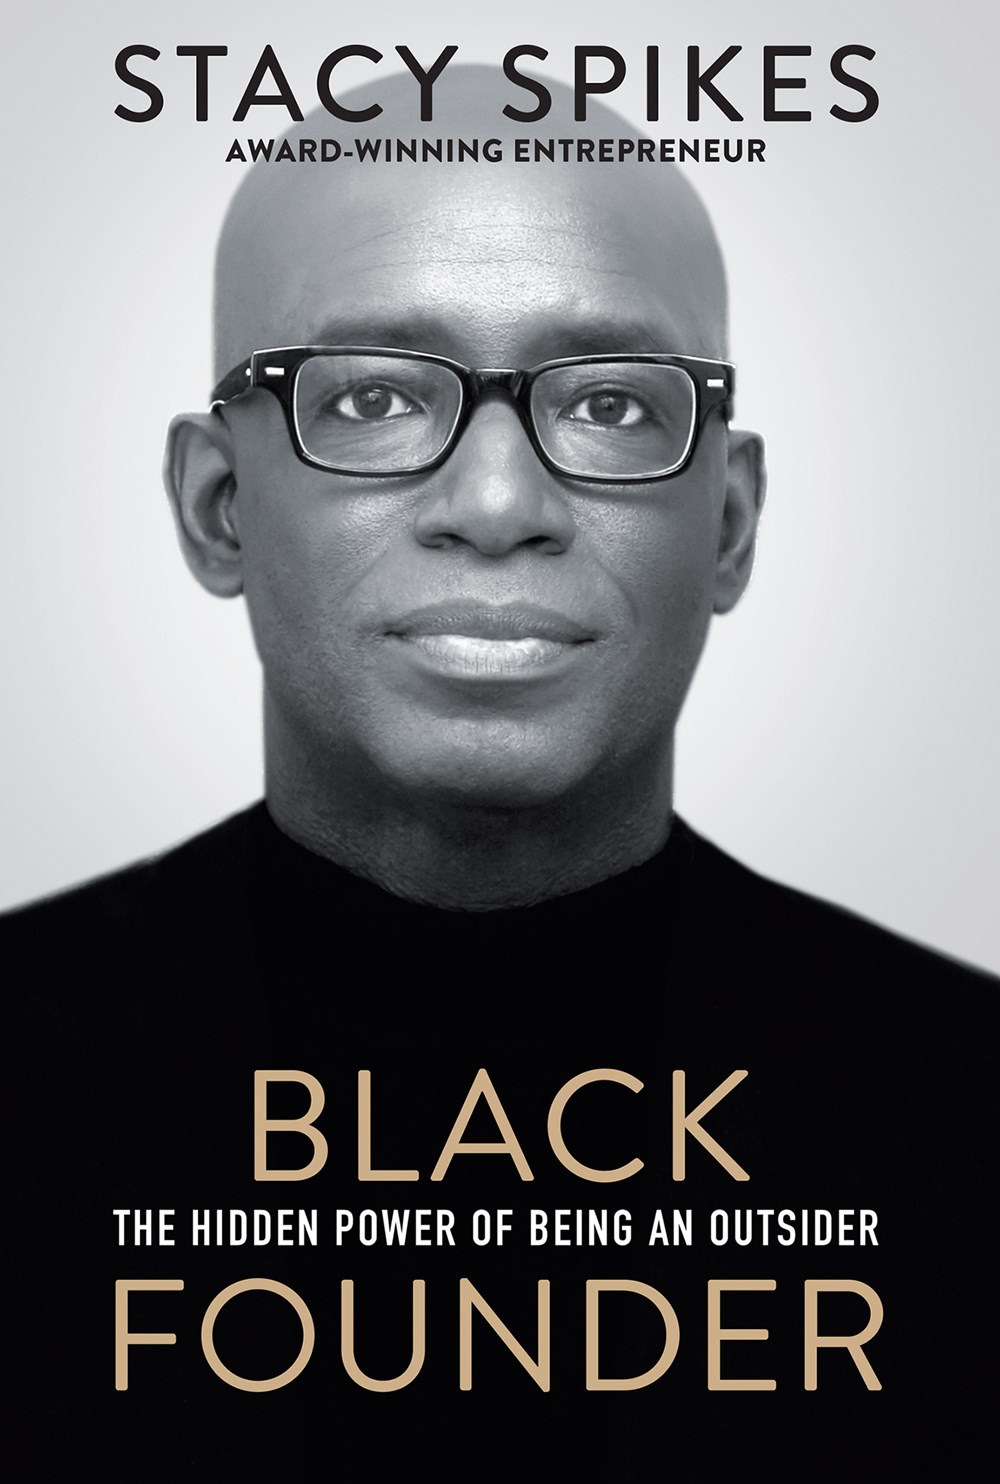 Black Founder cover image